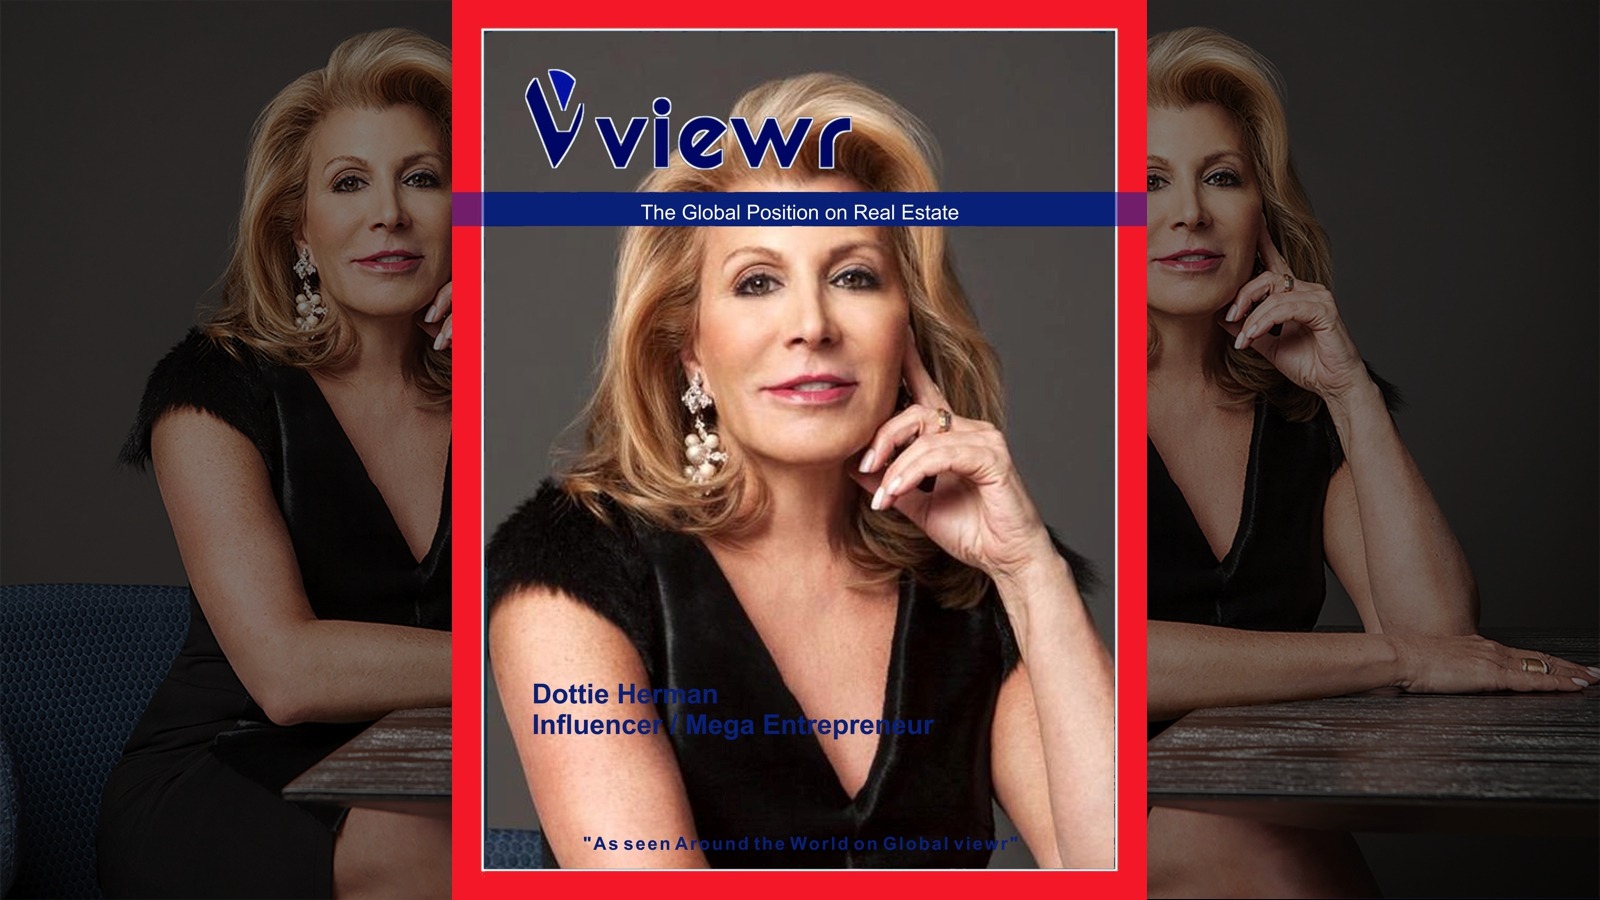 Dottie Herman on Global viewr Magazine